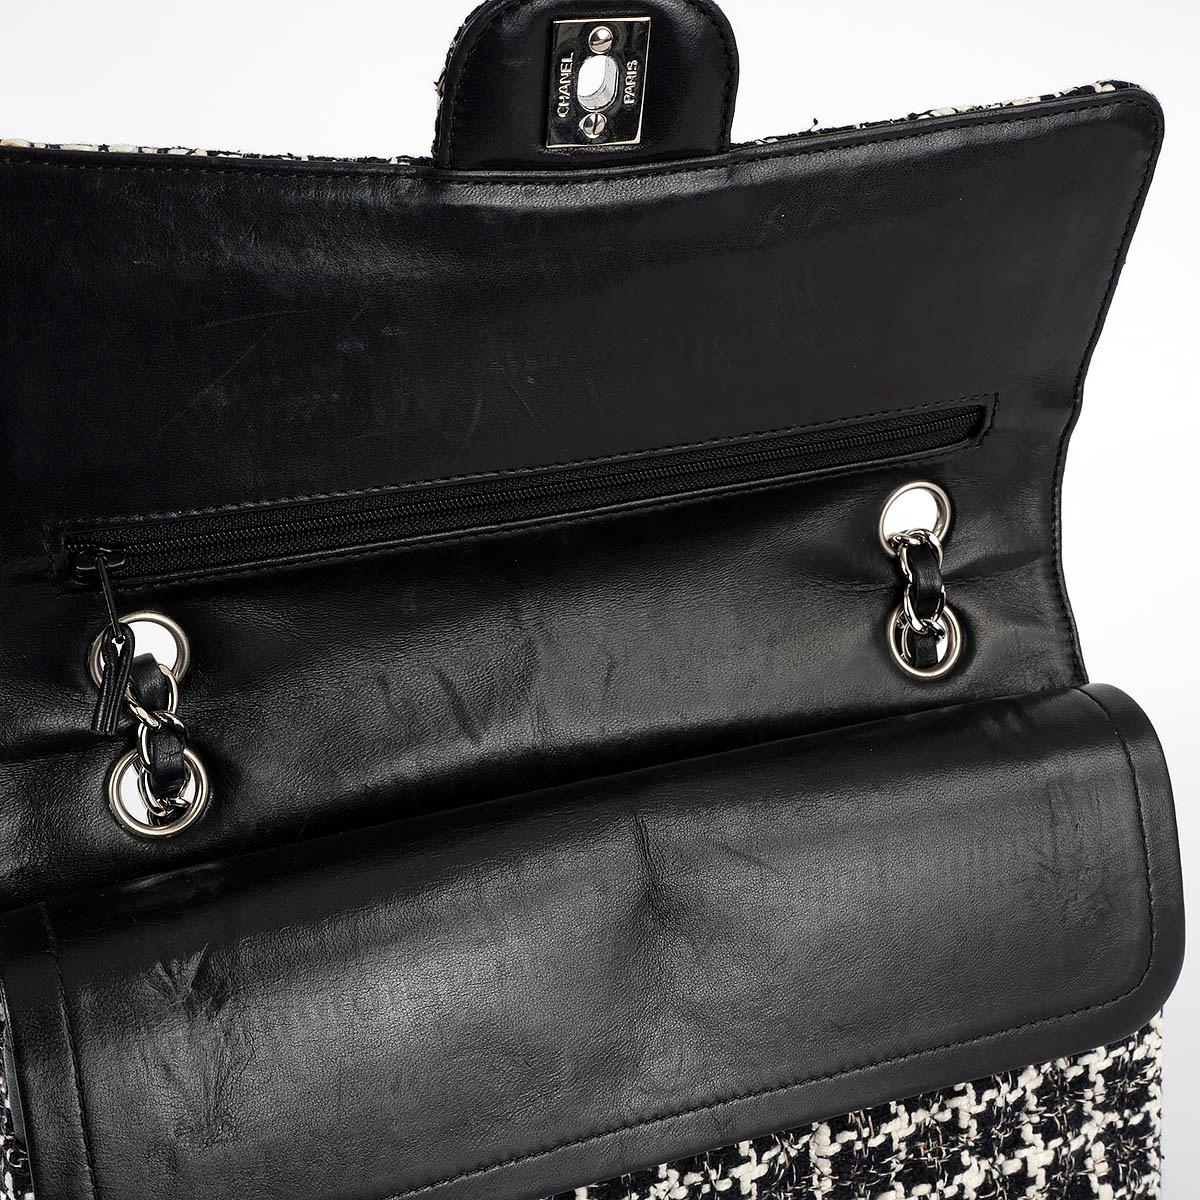 CHANEL black white CLASSIC MEDIUM TWEED TIMELESS DOBULE FLAP Bag For Sale 4